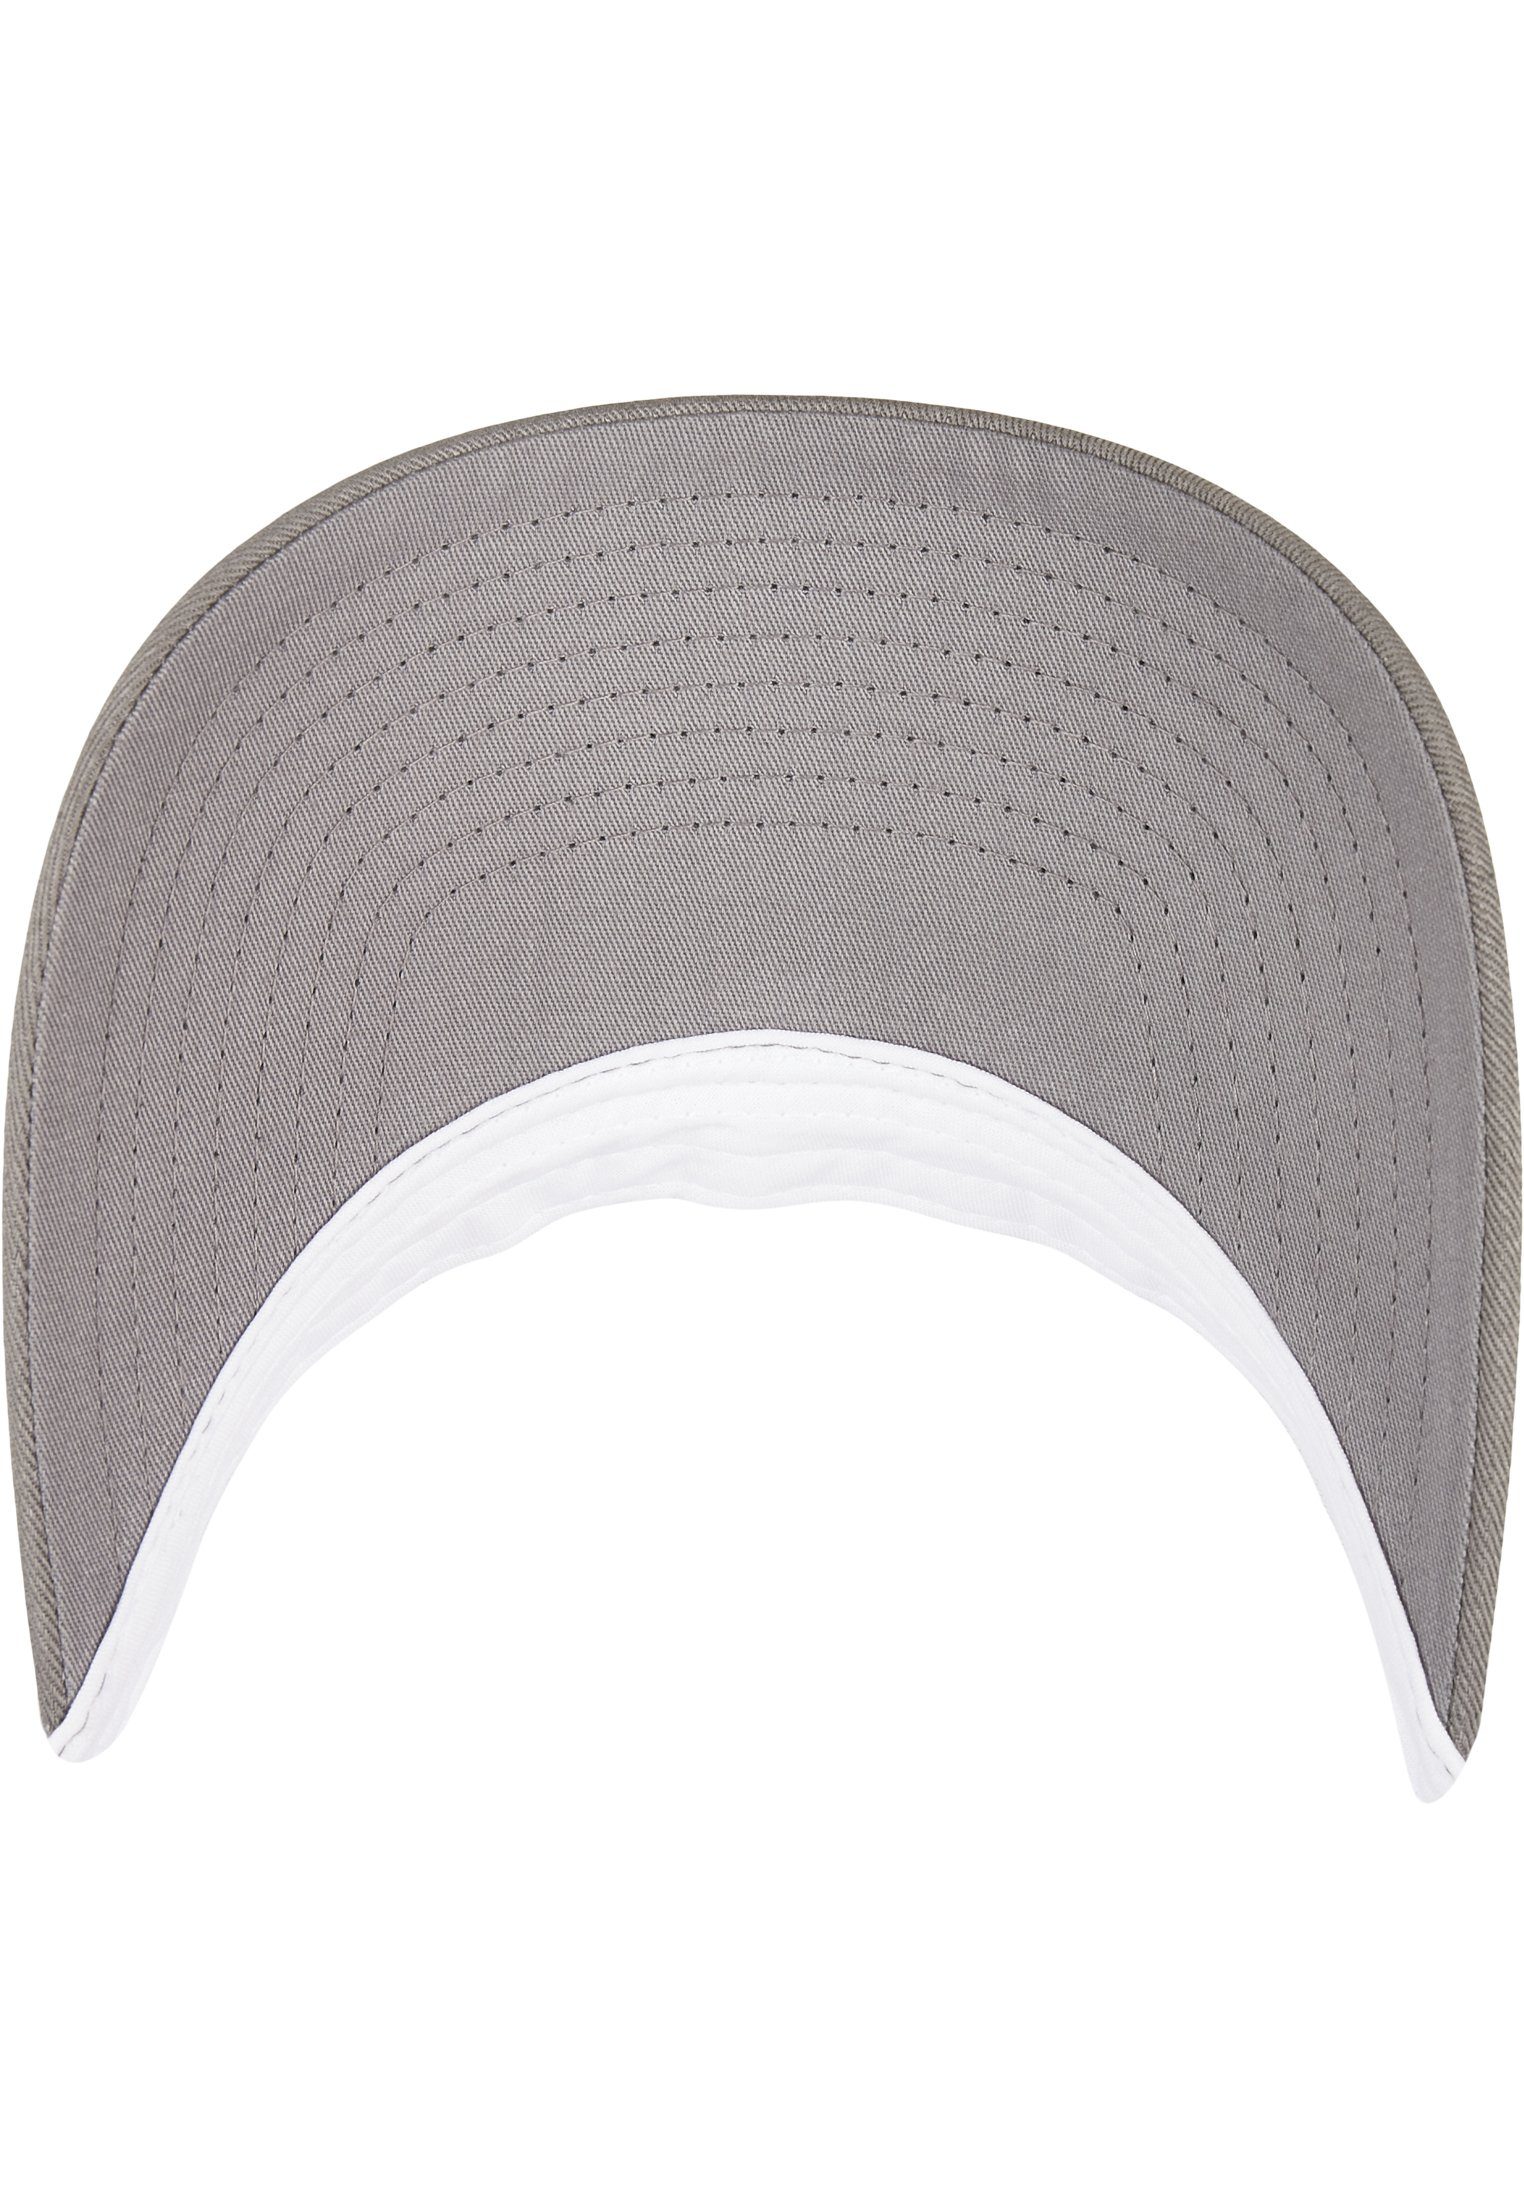 Flexfit Flex Cap Caps YP RECYCLED 2-TONE grey/white TRUCKER CLASSICS RETRO CAP